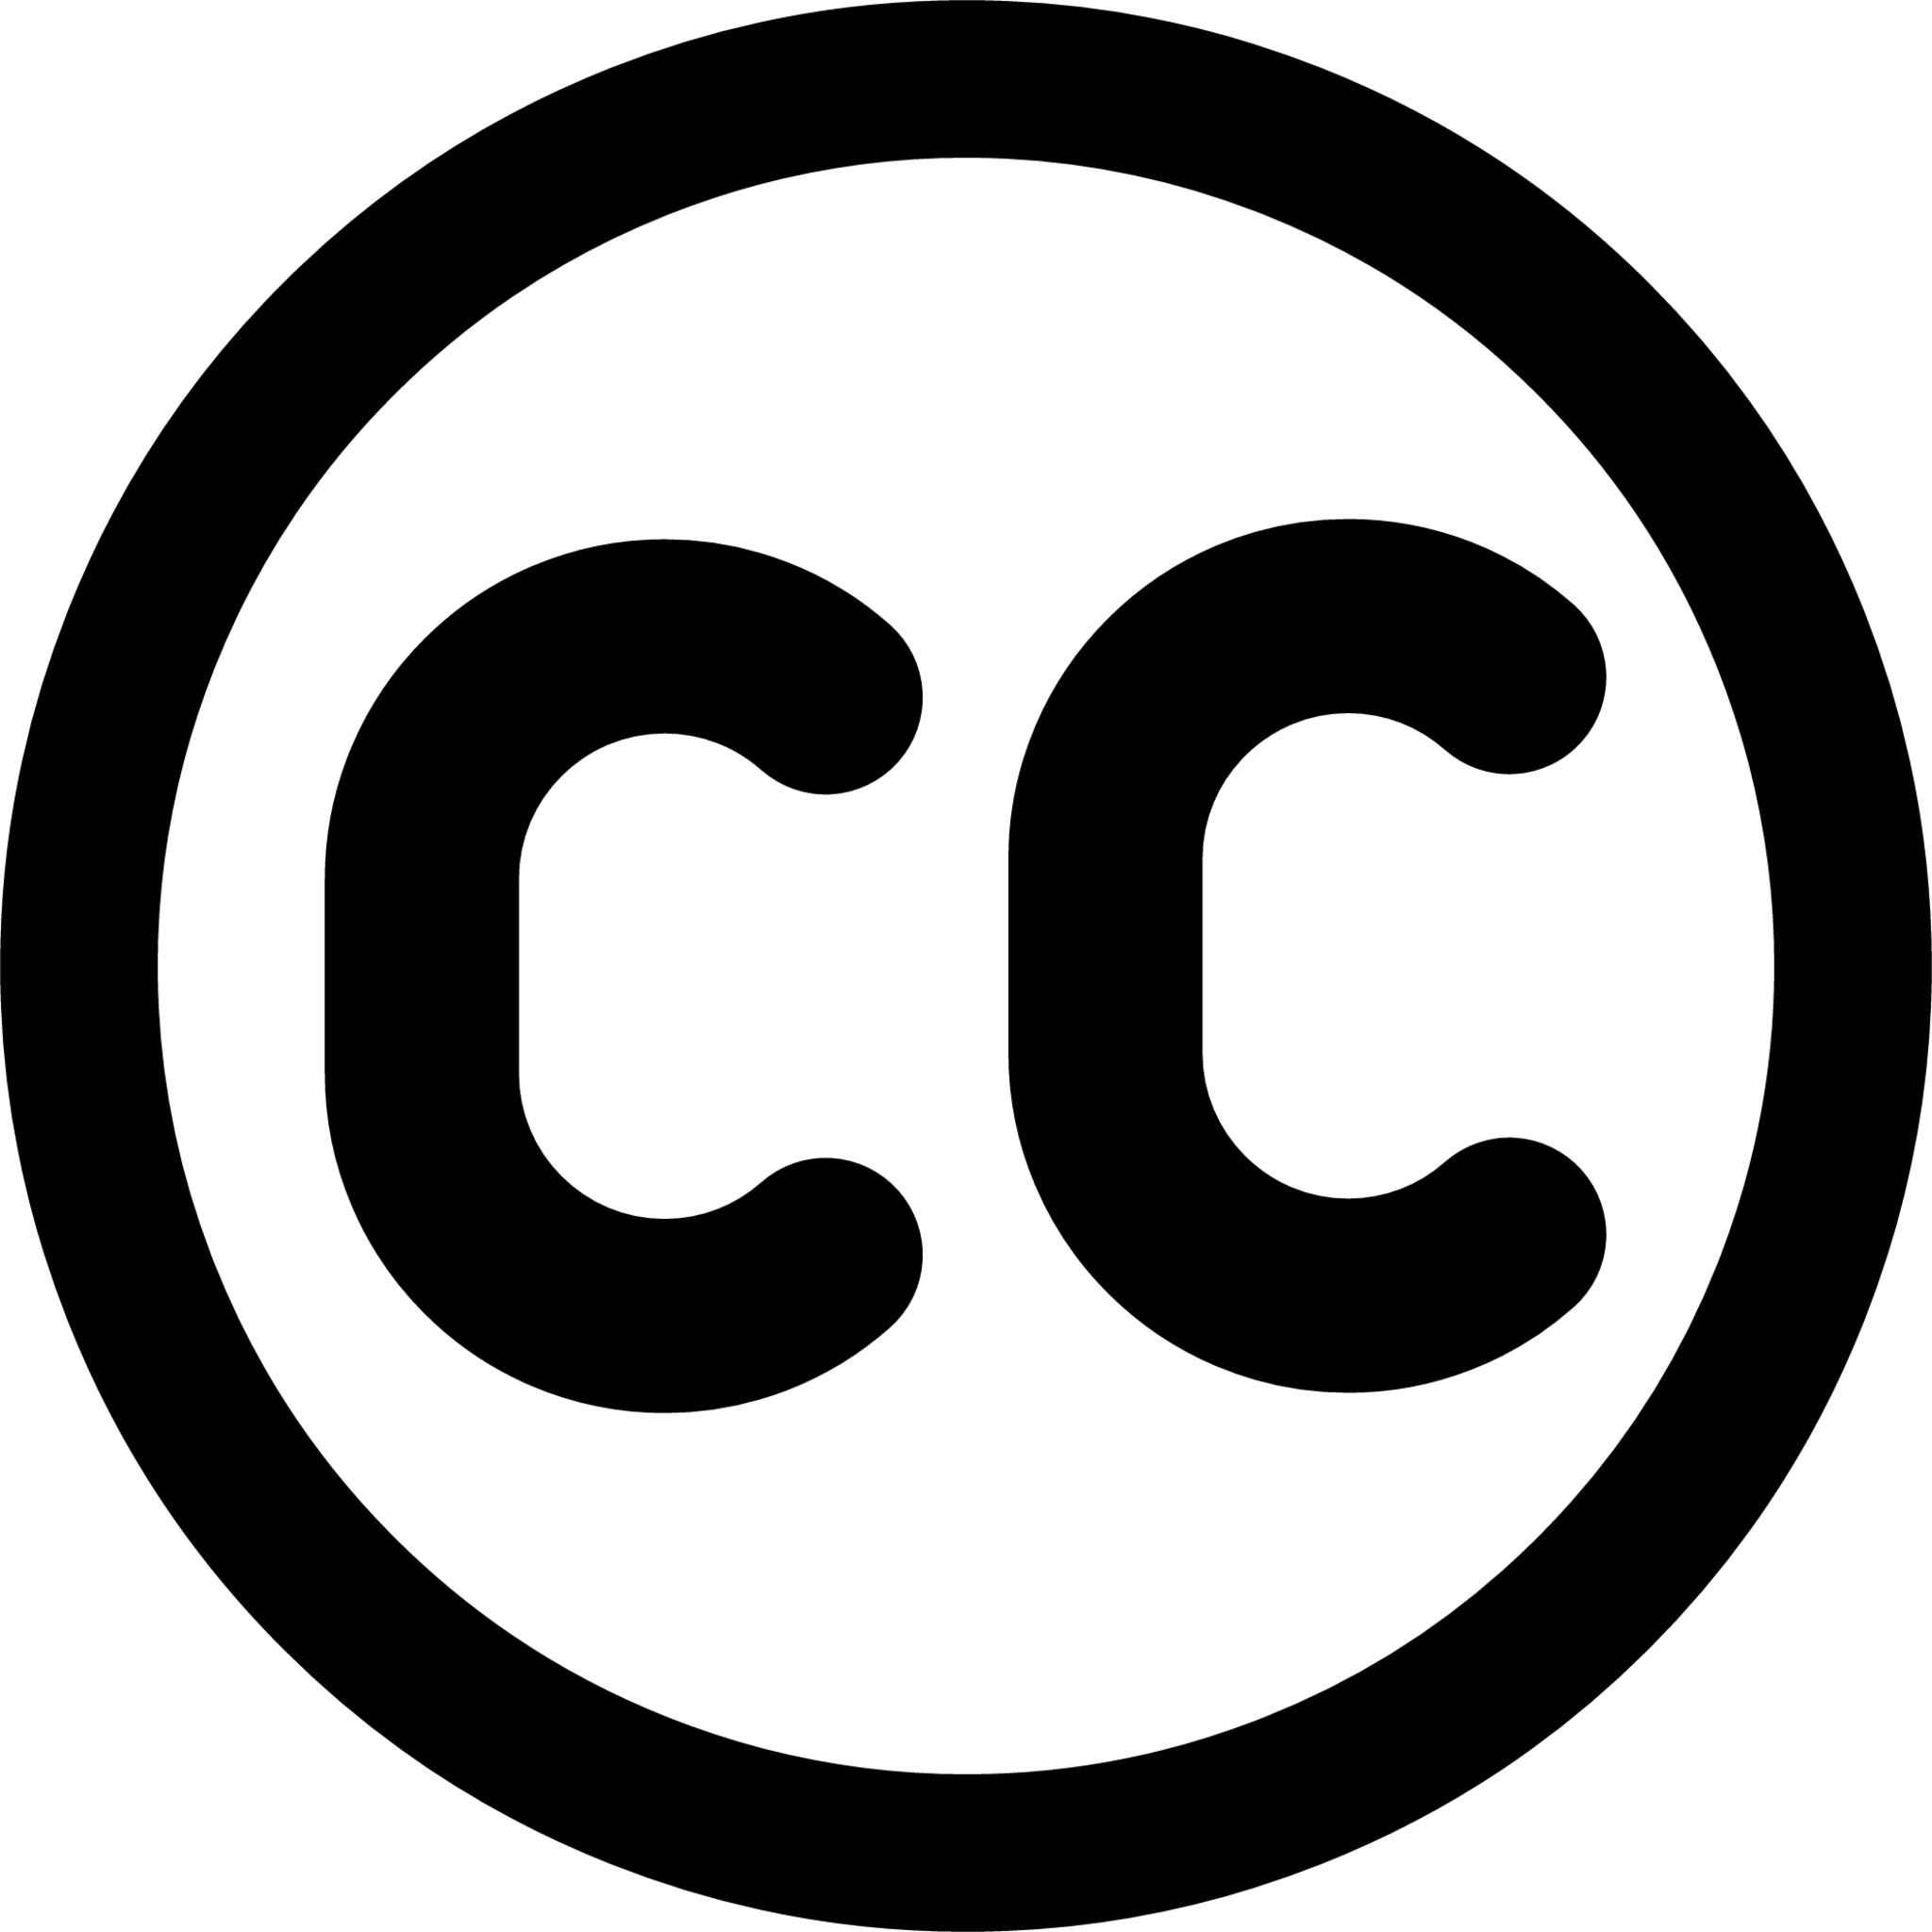 circled cc emoji